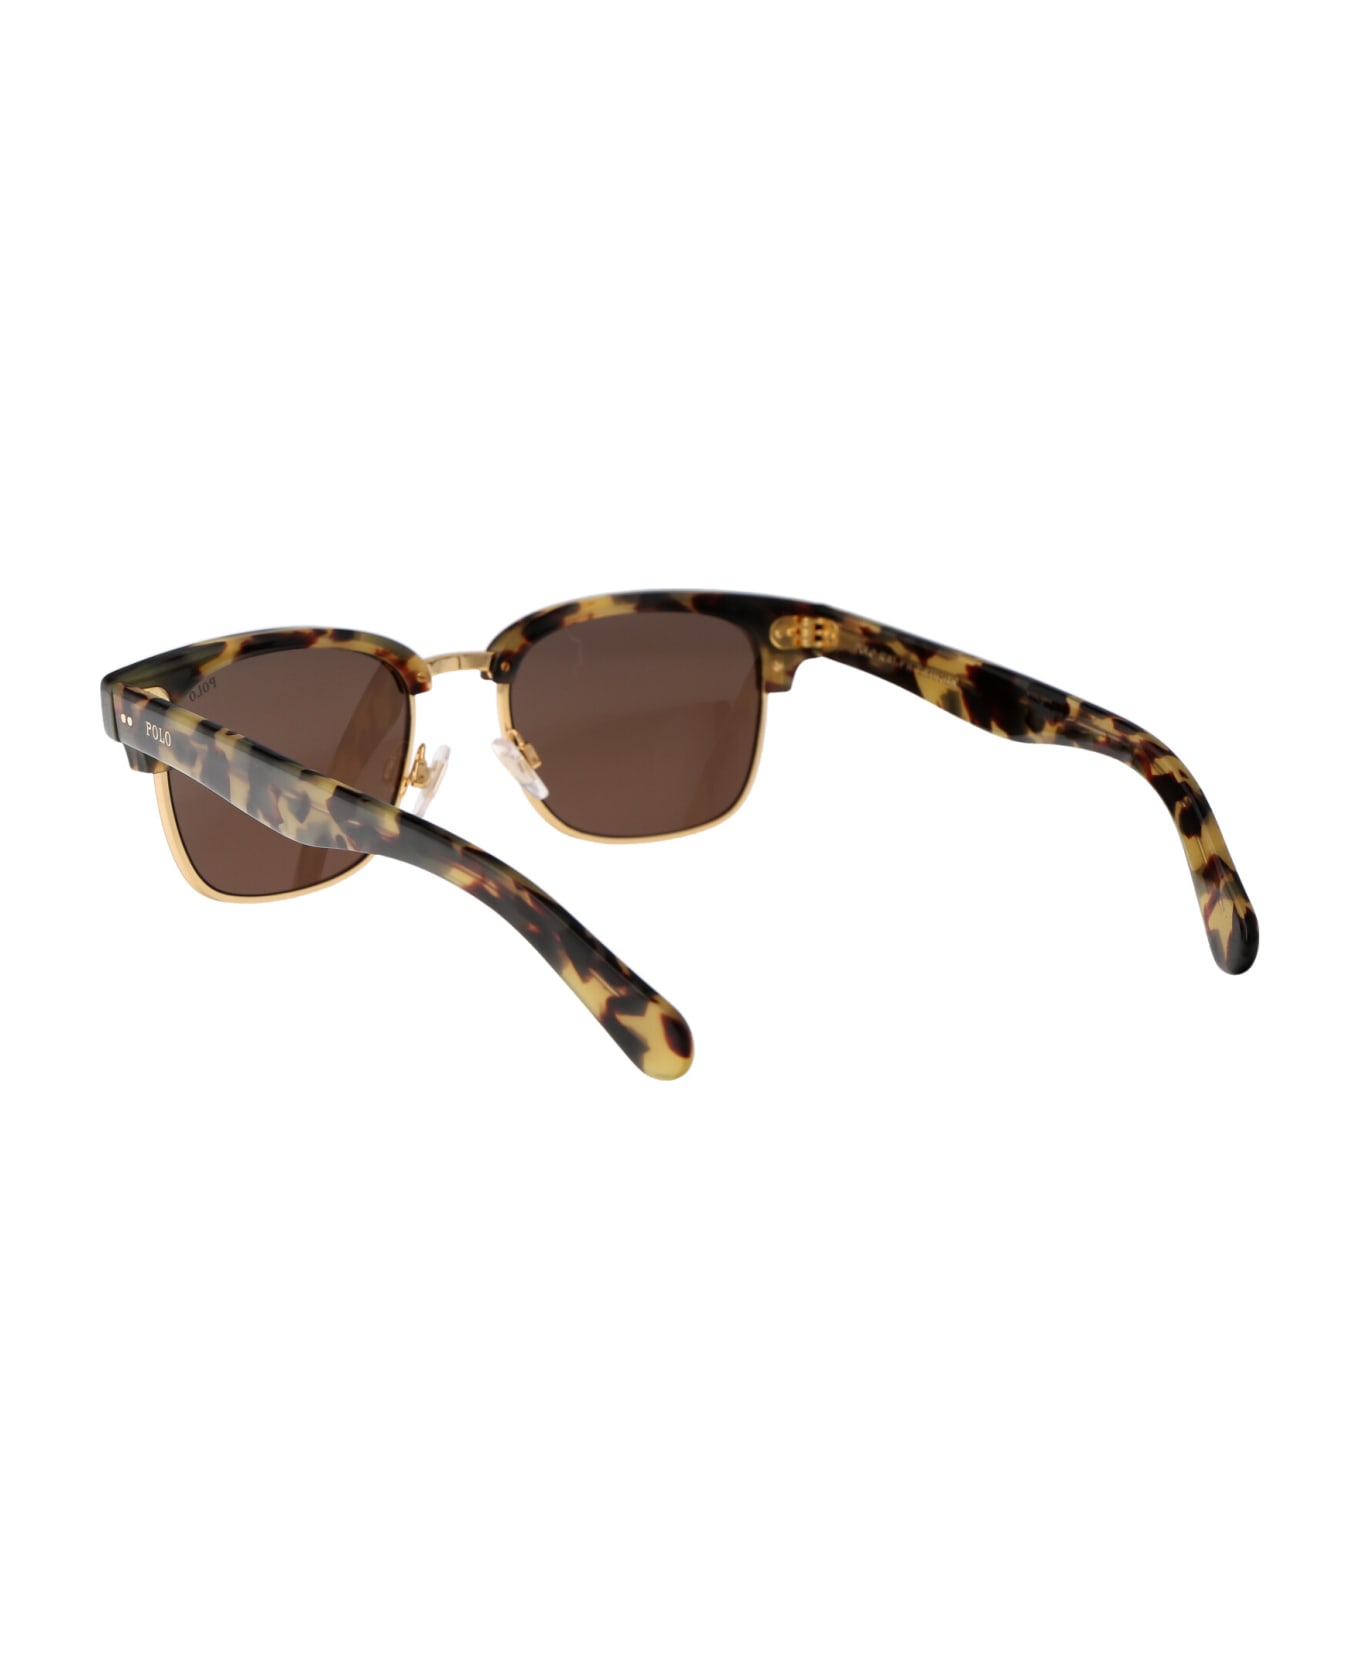 Polo Ralph Lauren 0ph4202 Sunglasses - 608773 Shiny Camo Havana